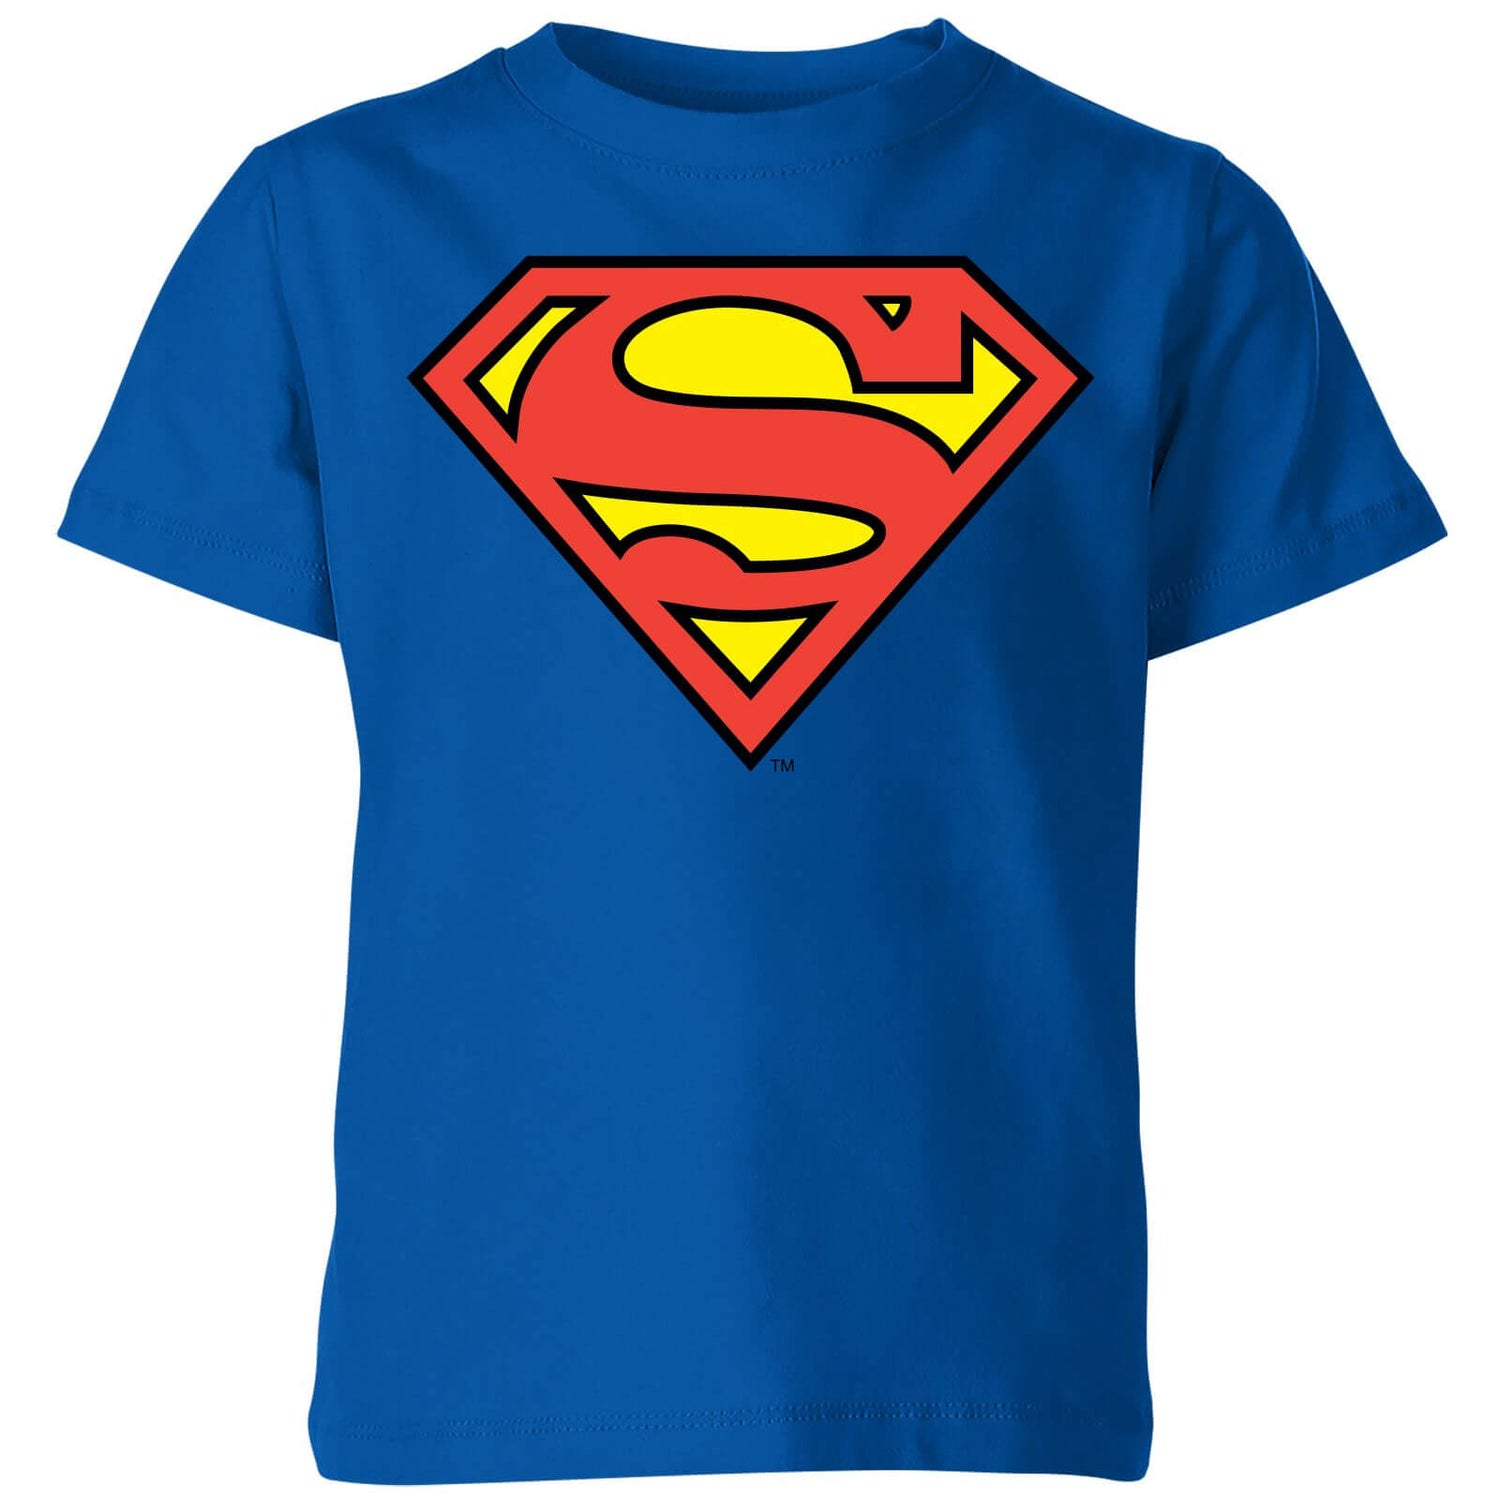 DC Originals Official Superman Clothing Shield Blau Kinder T-Shirt - Royal